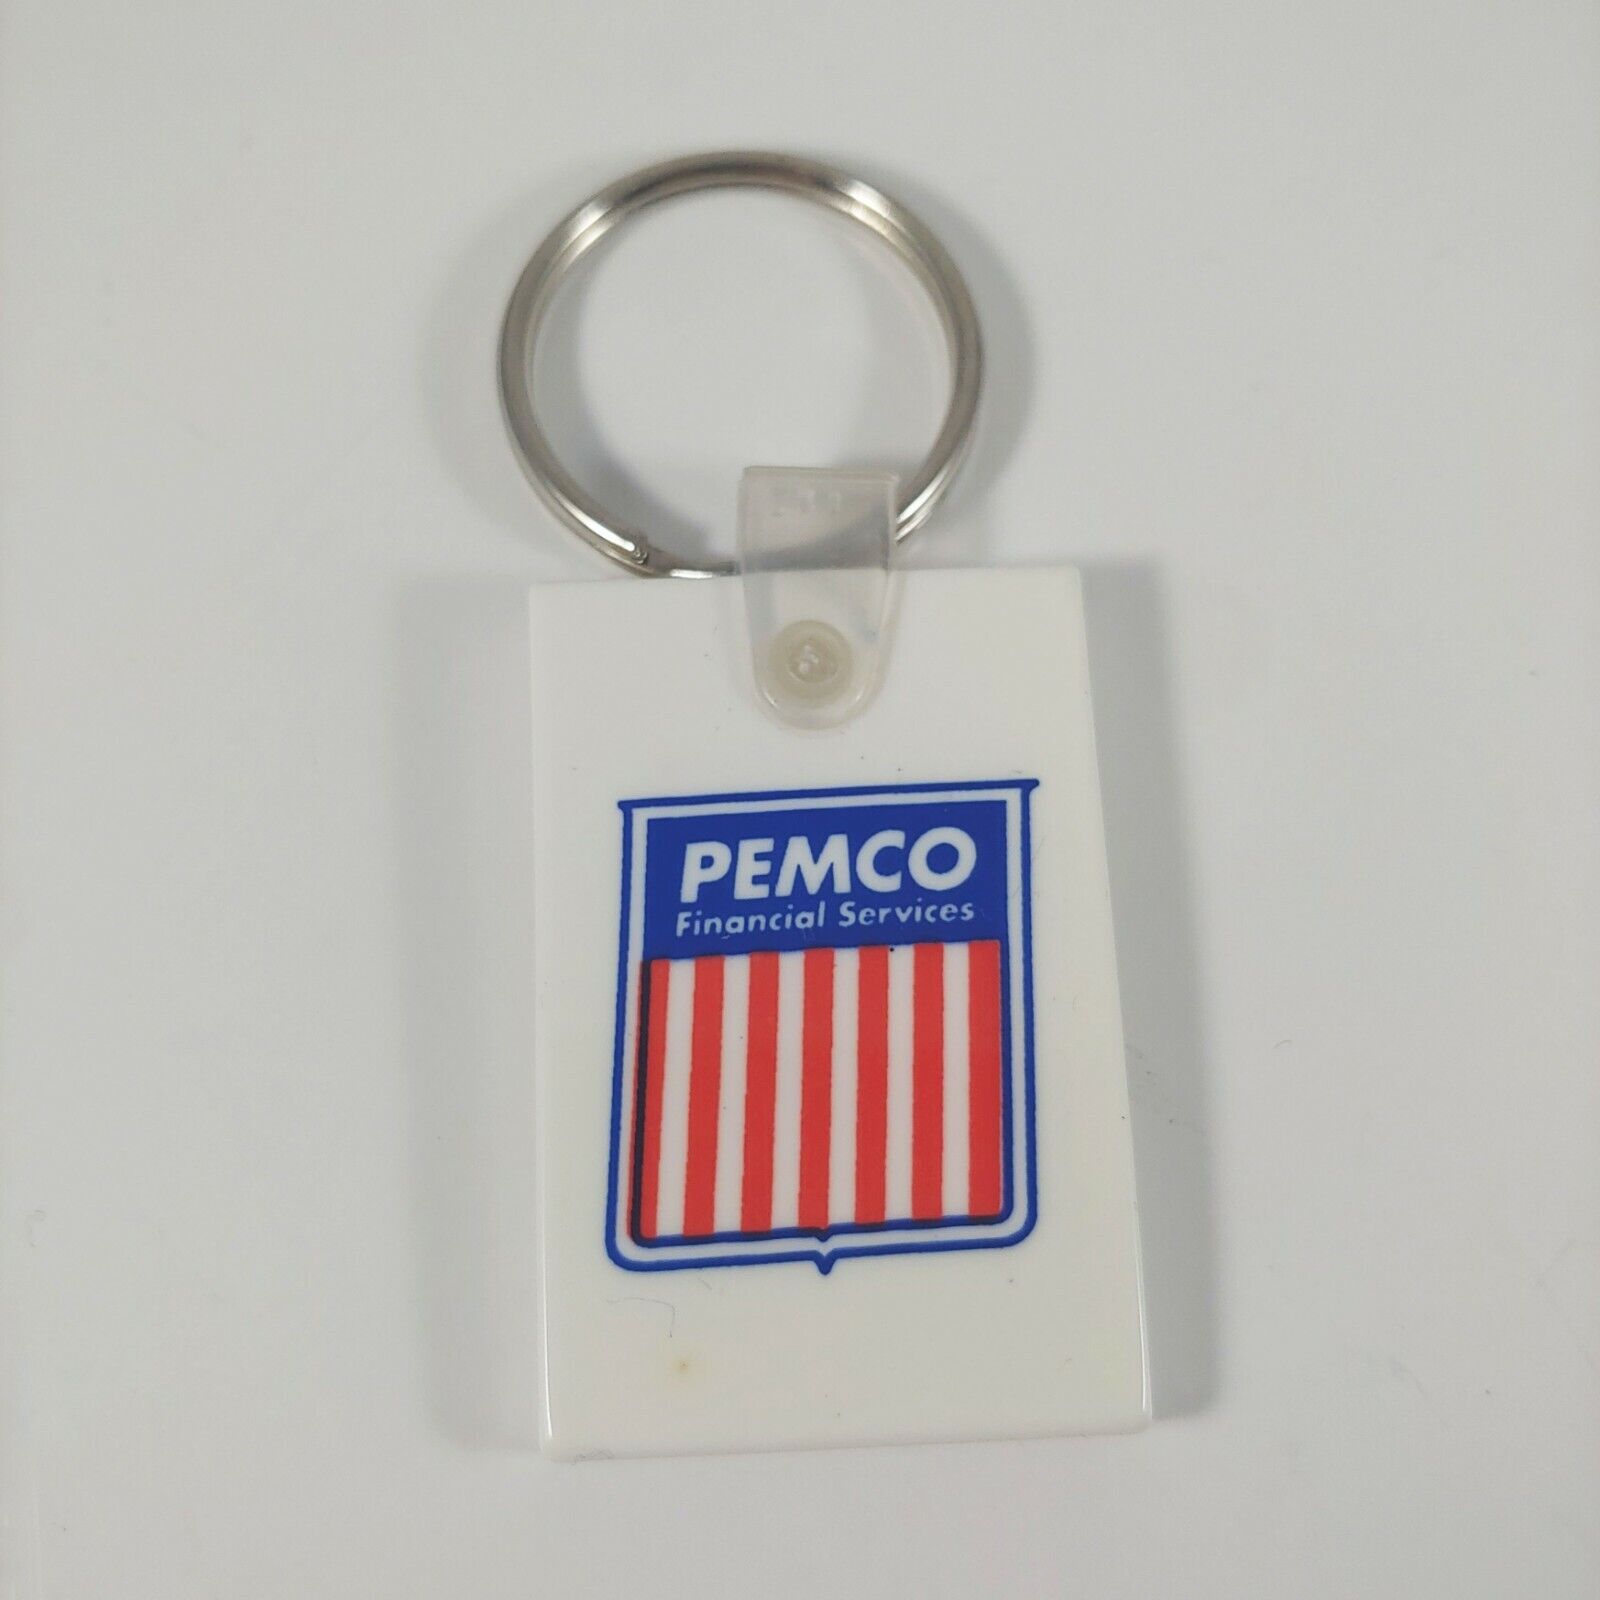 Pemco Financial Services Banking Keychain Key Ring Spokane Seattle Washington